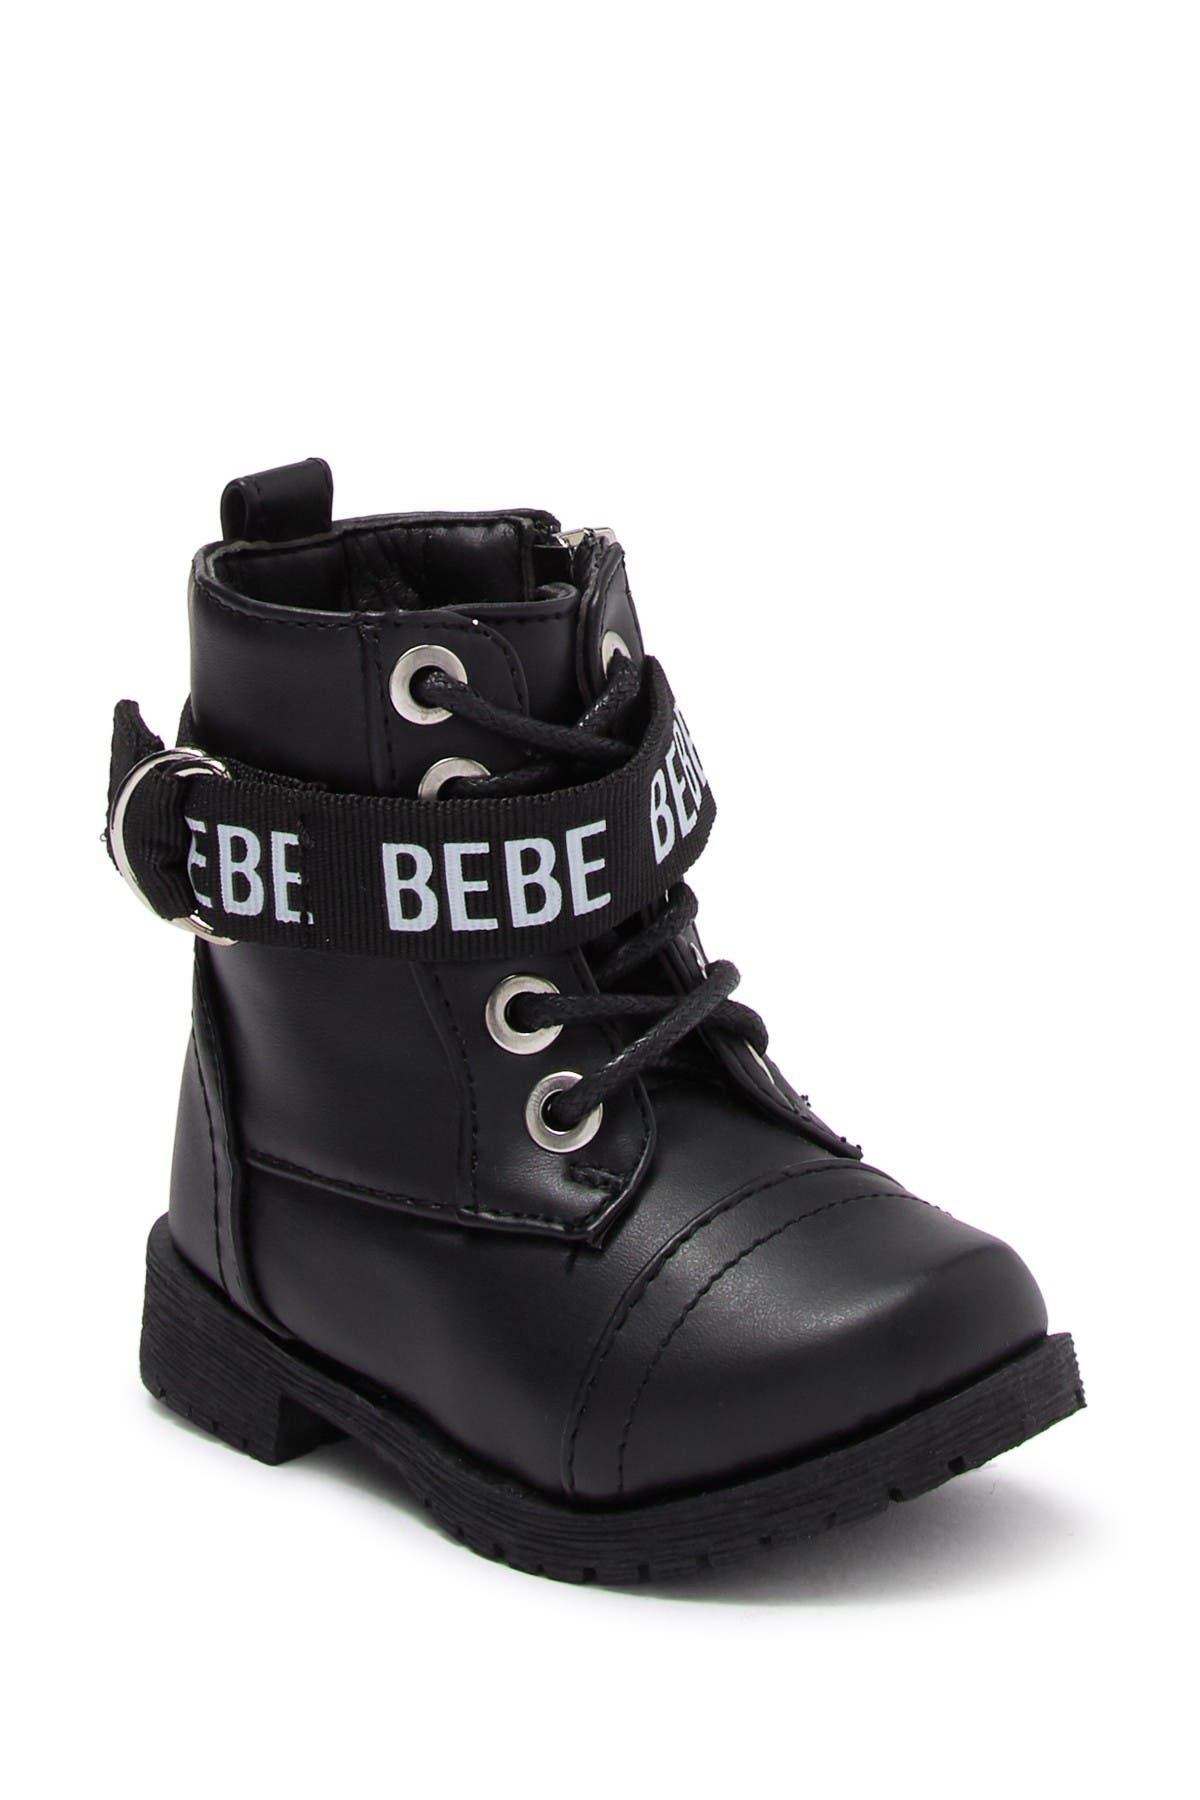 bebe boots